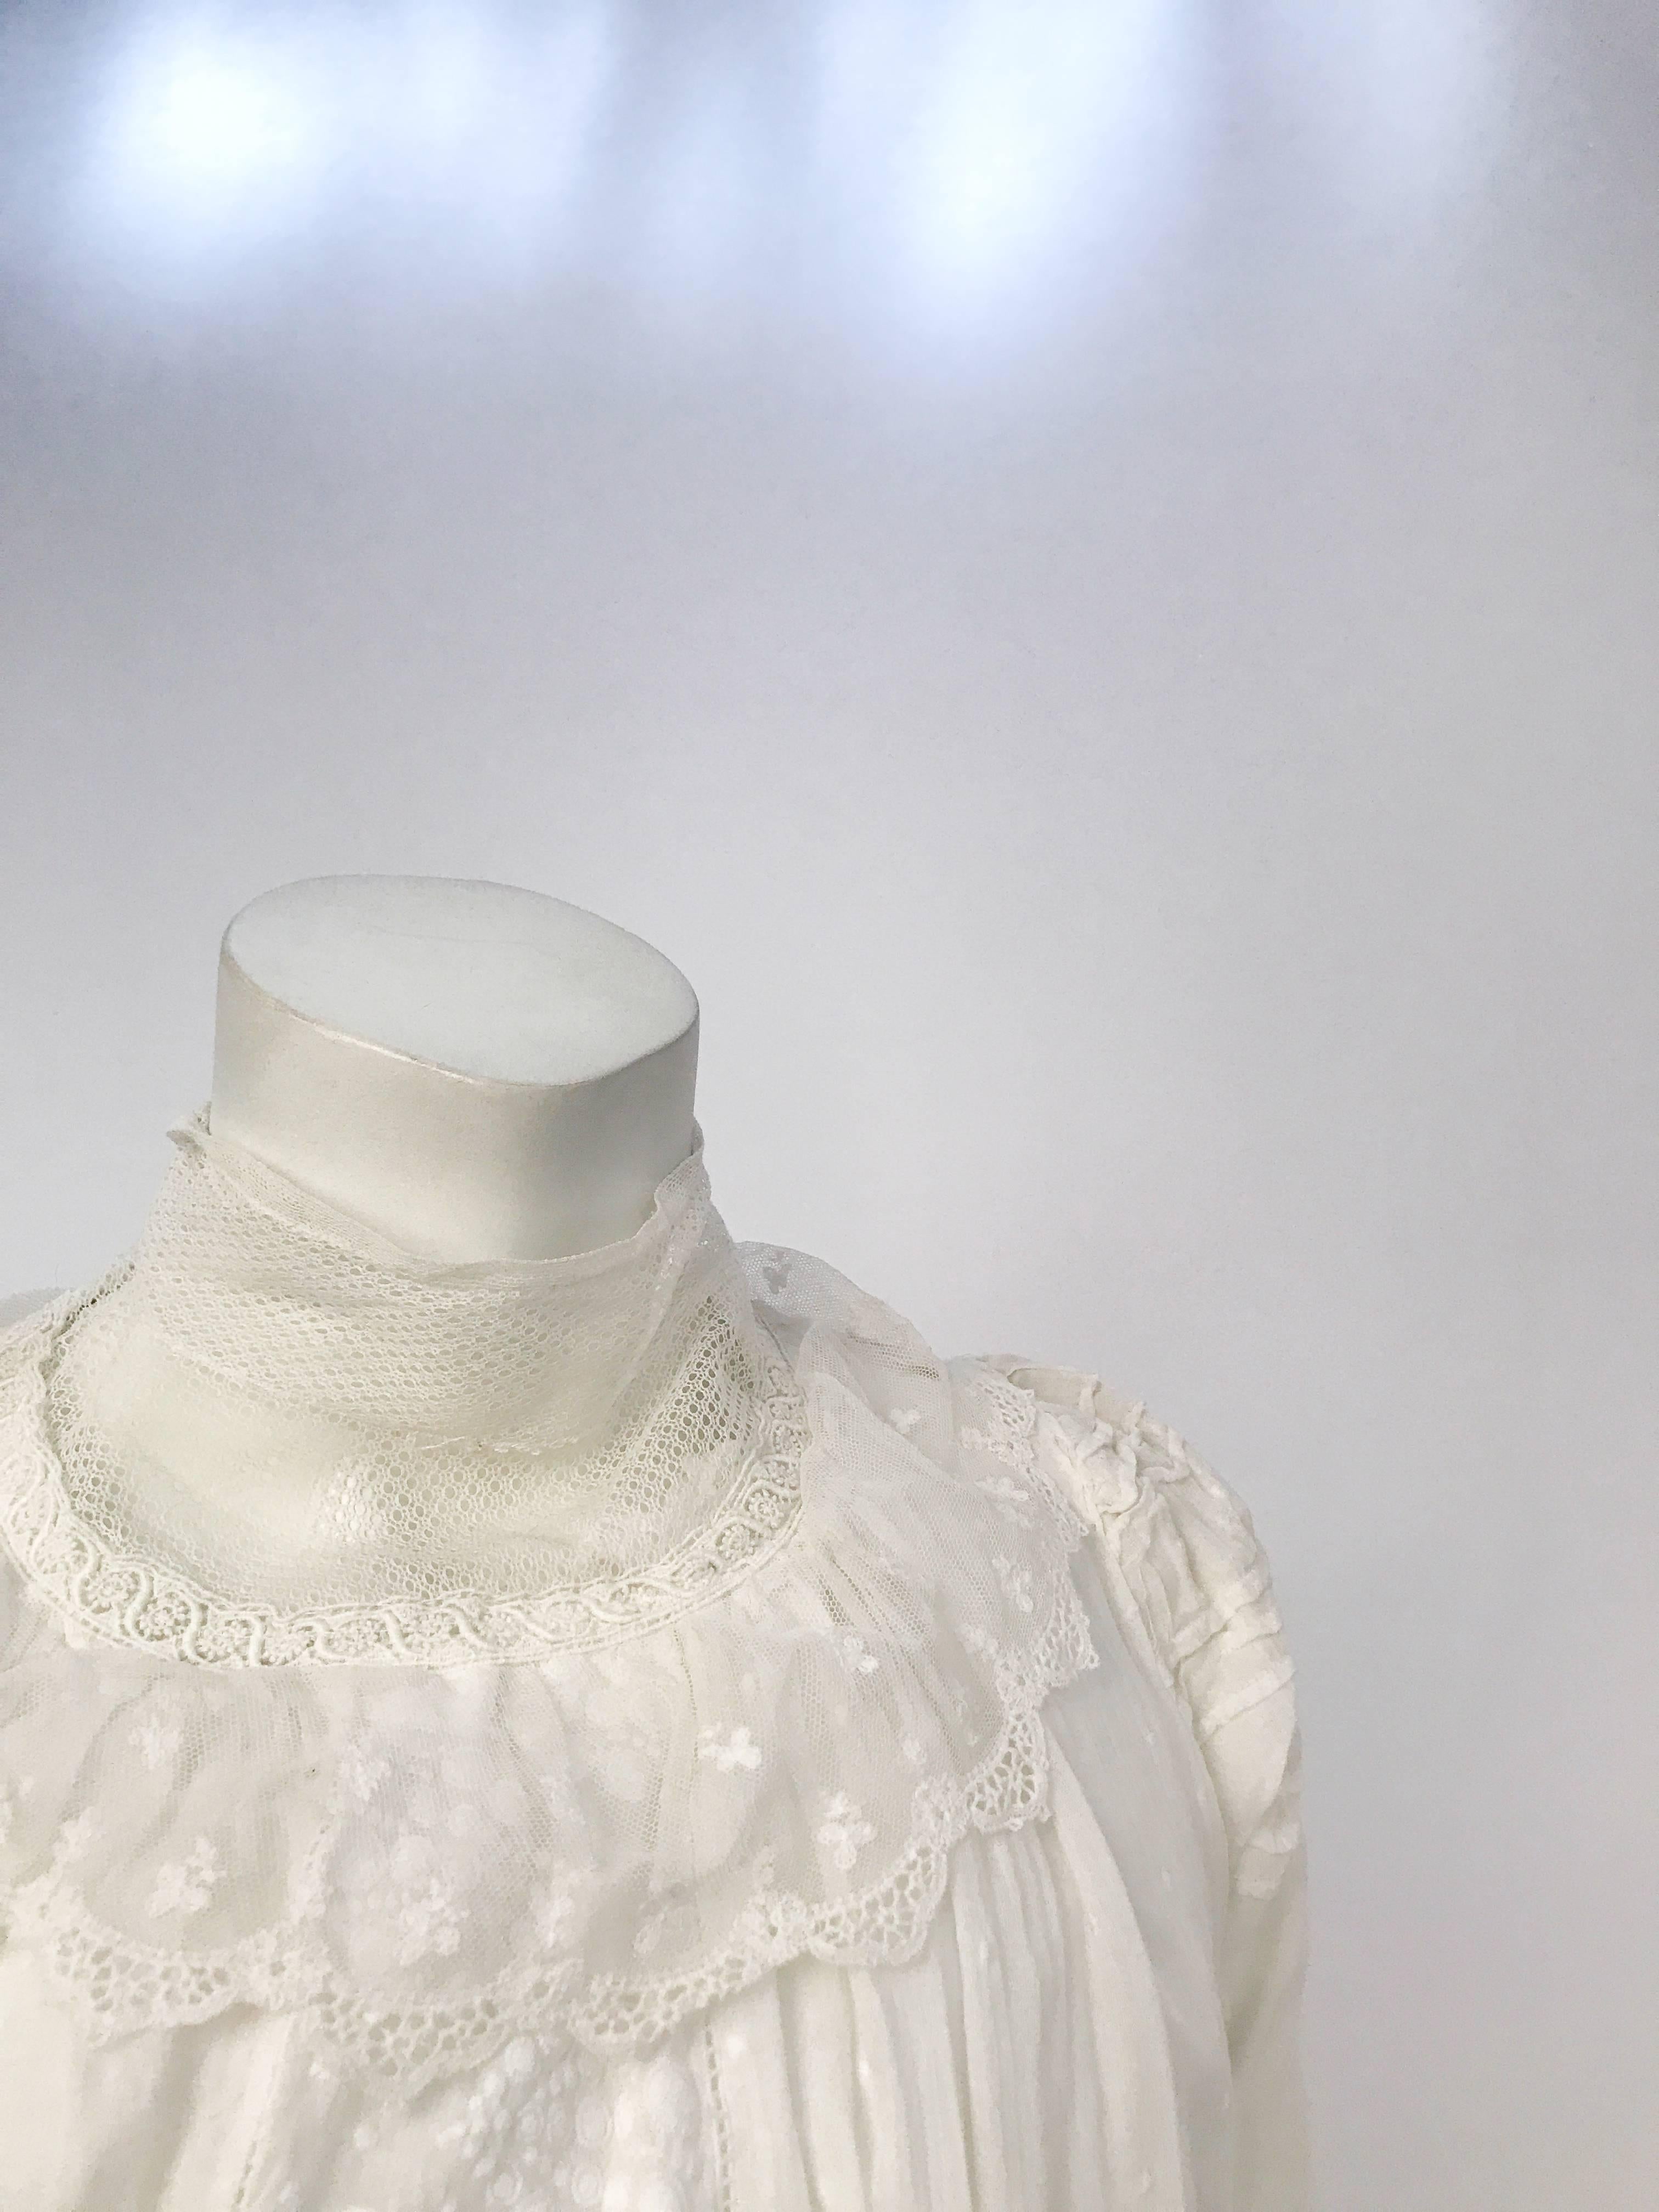 Women's Edwardian White Wedding/Lawn Dress with Lace Details